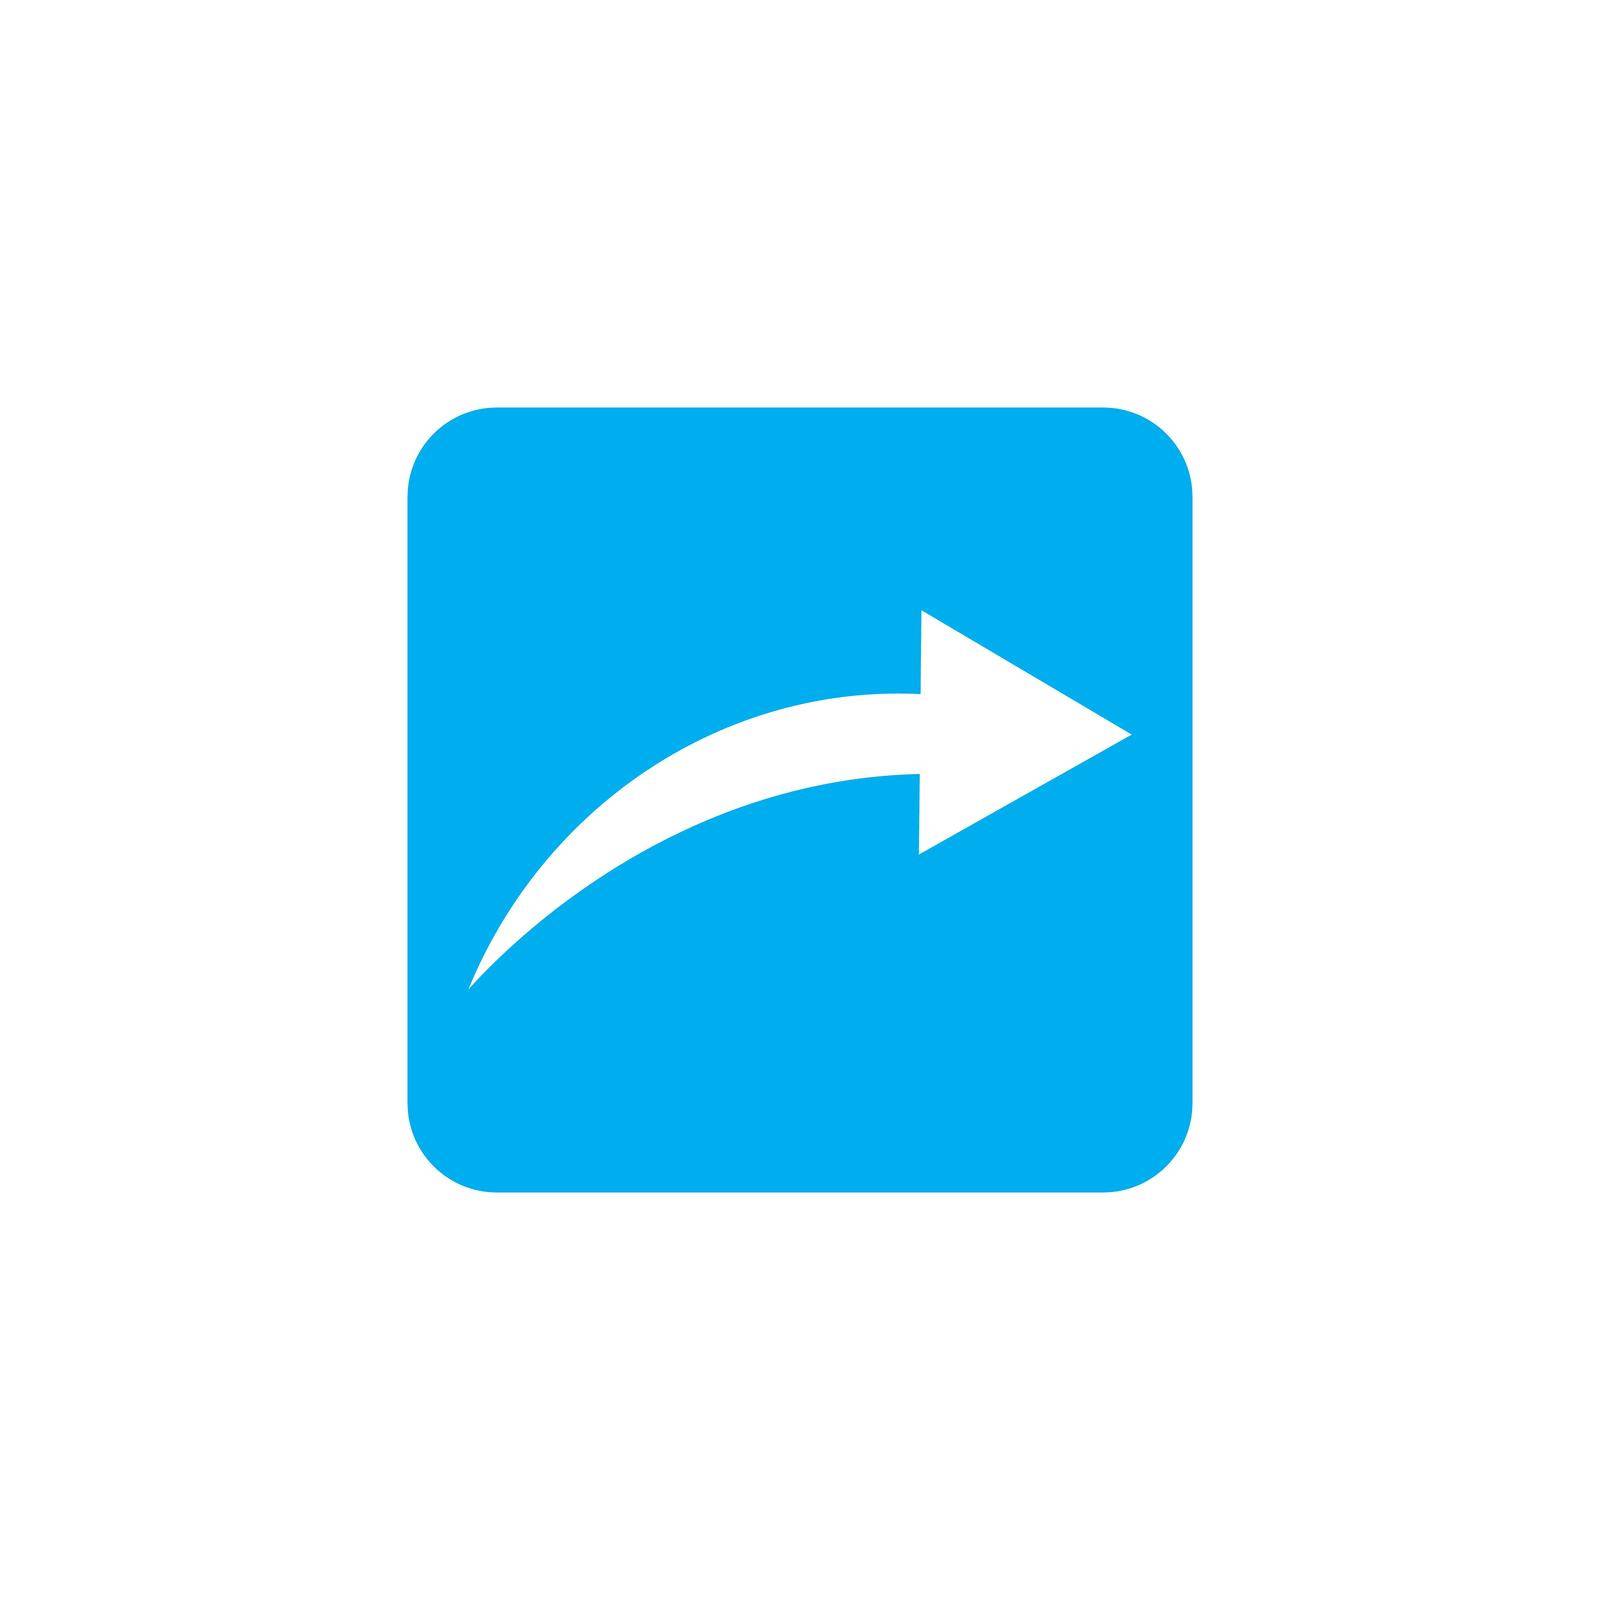 Like, share icon logo vector design